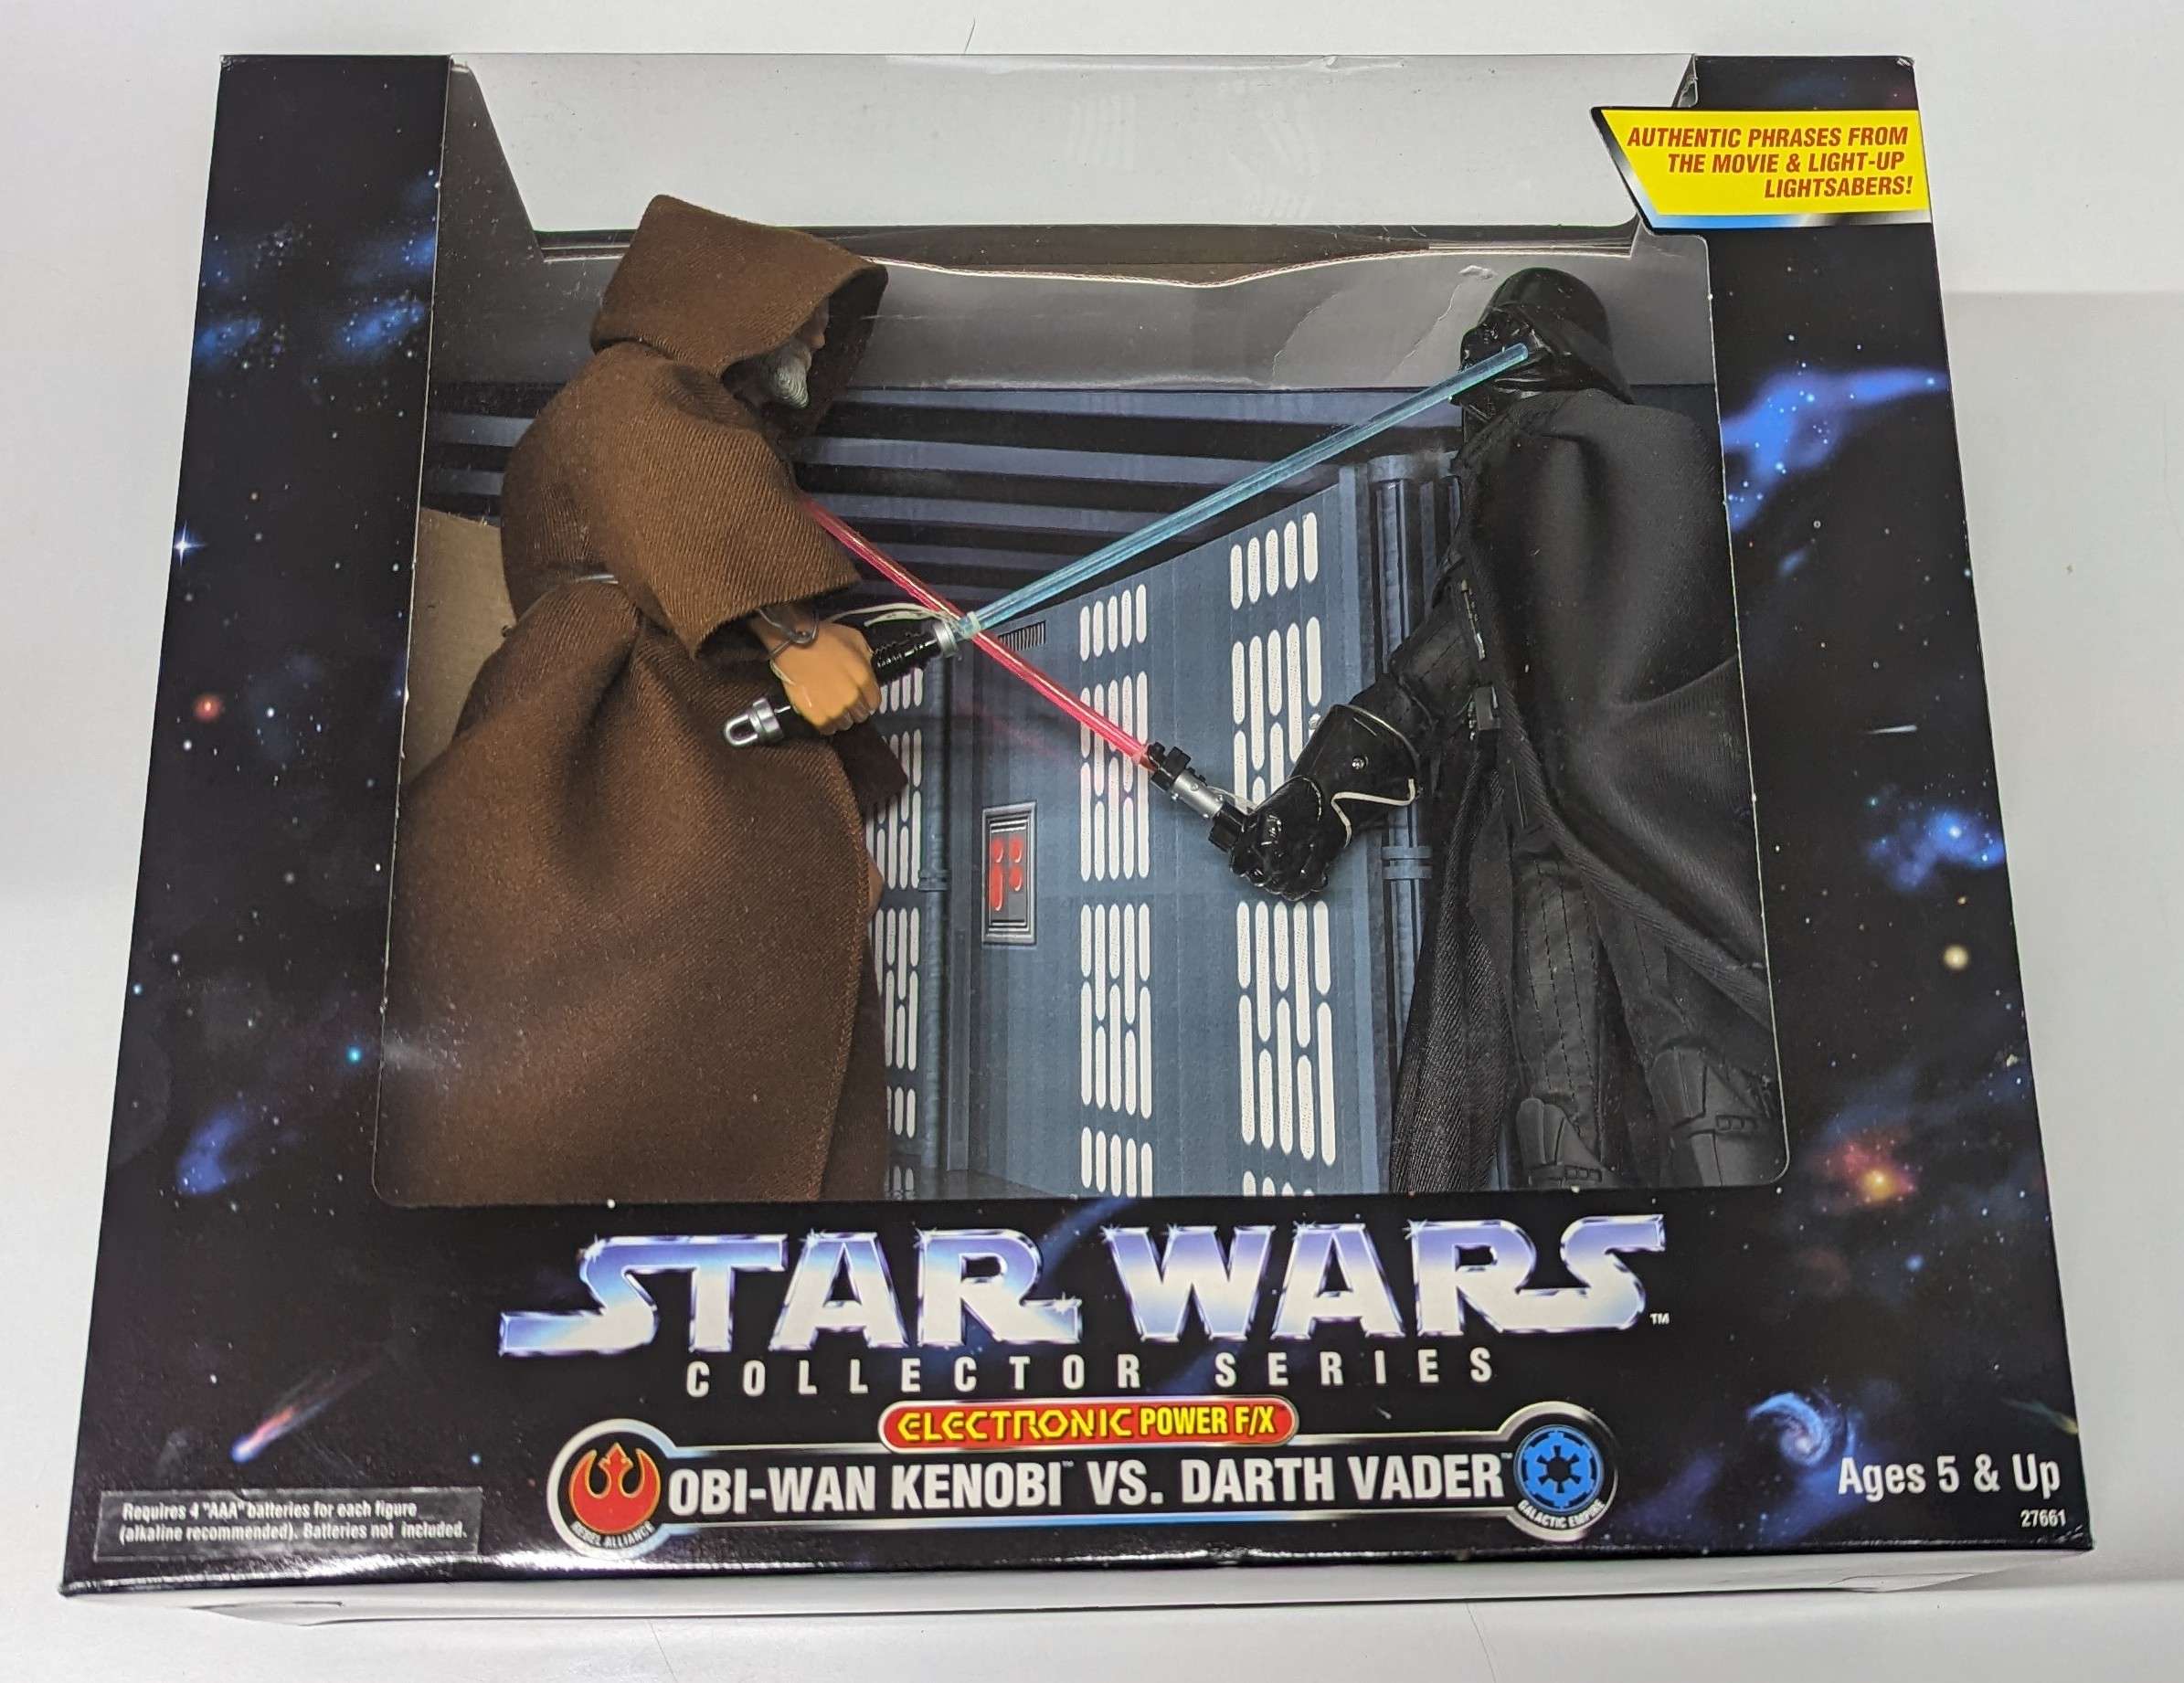 1997 Hasbro Star Wars Collector Series Electronic Power F/X Obi-Wan Kenobi vs Darth Vader